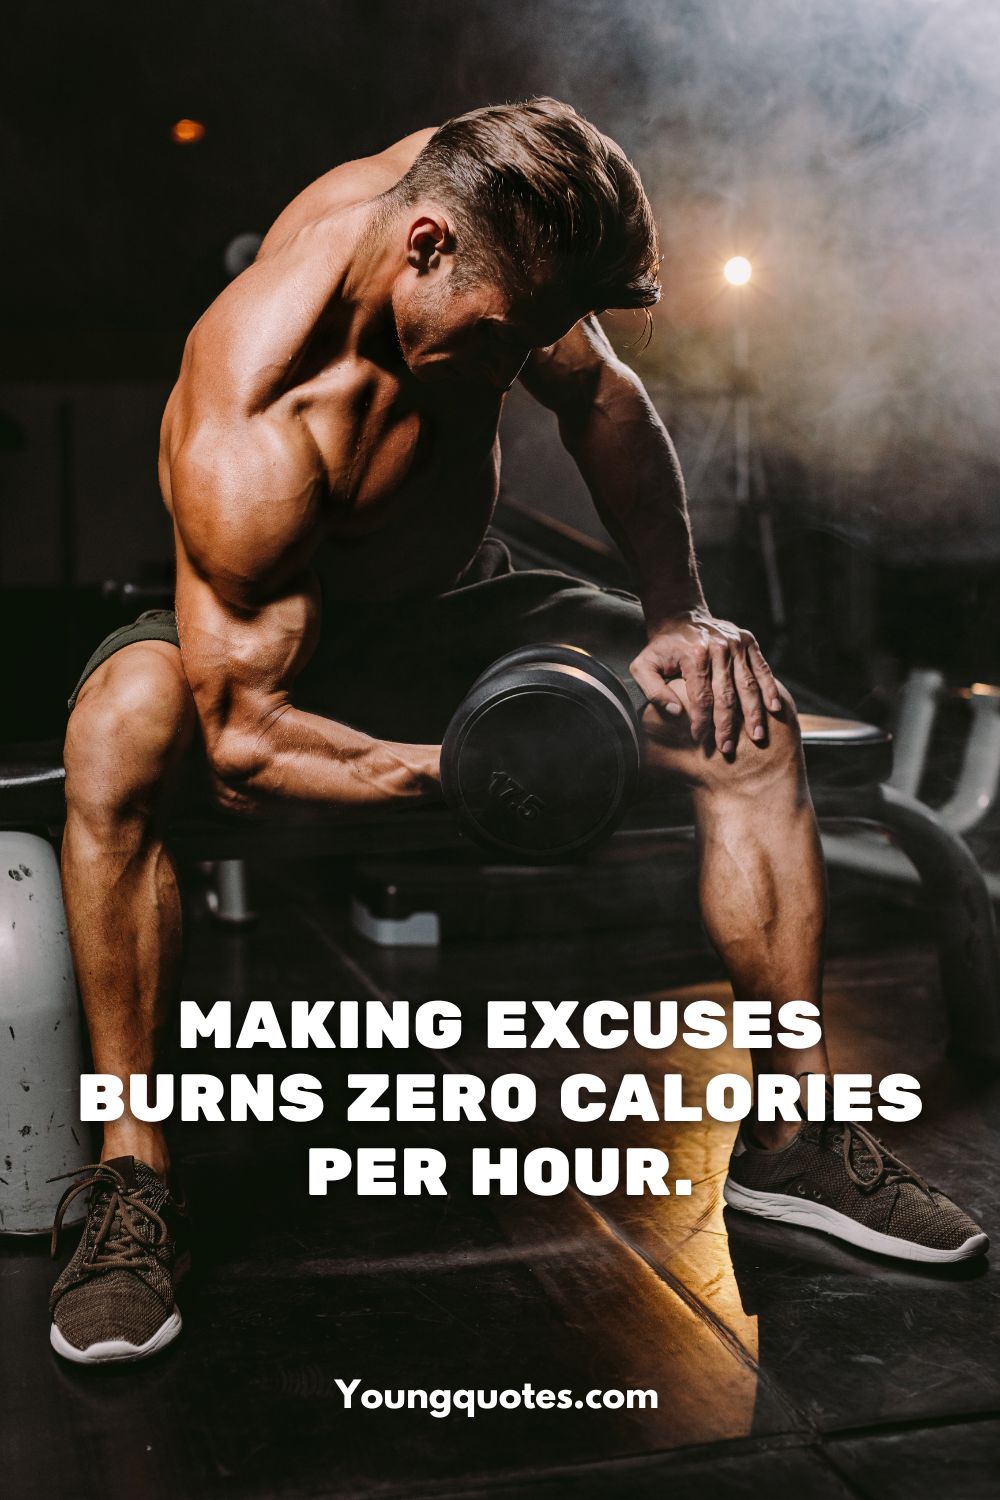 Making excuses burns zero calories per hour.